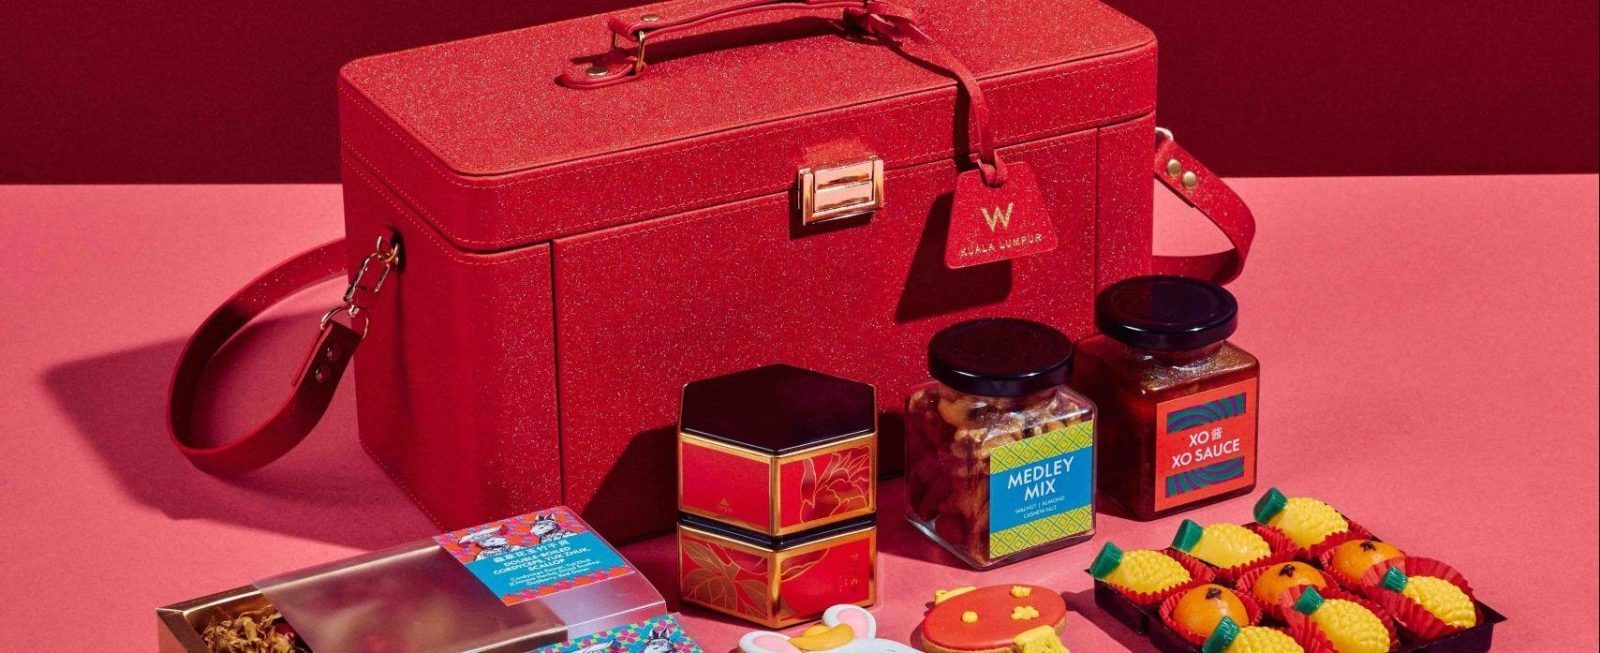 20 Designer Red Packs We Love This CNY 2019